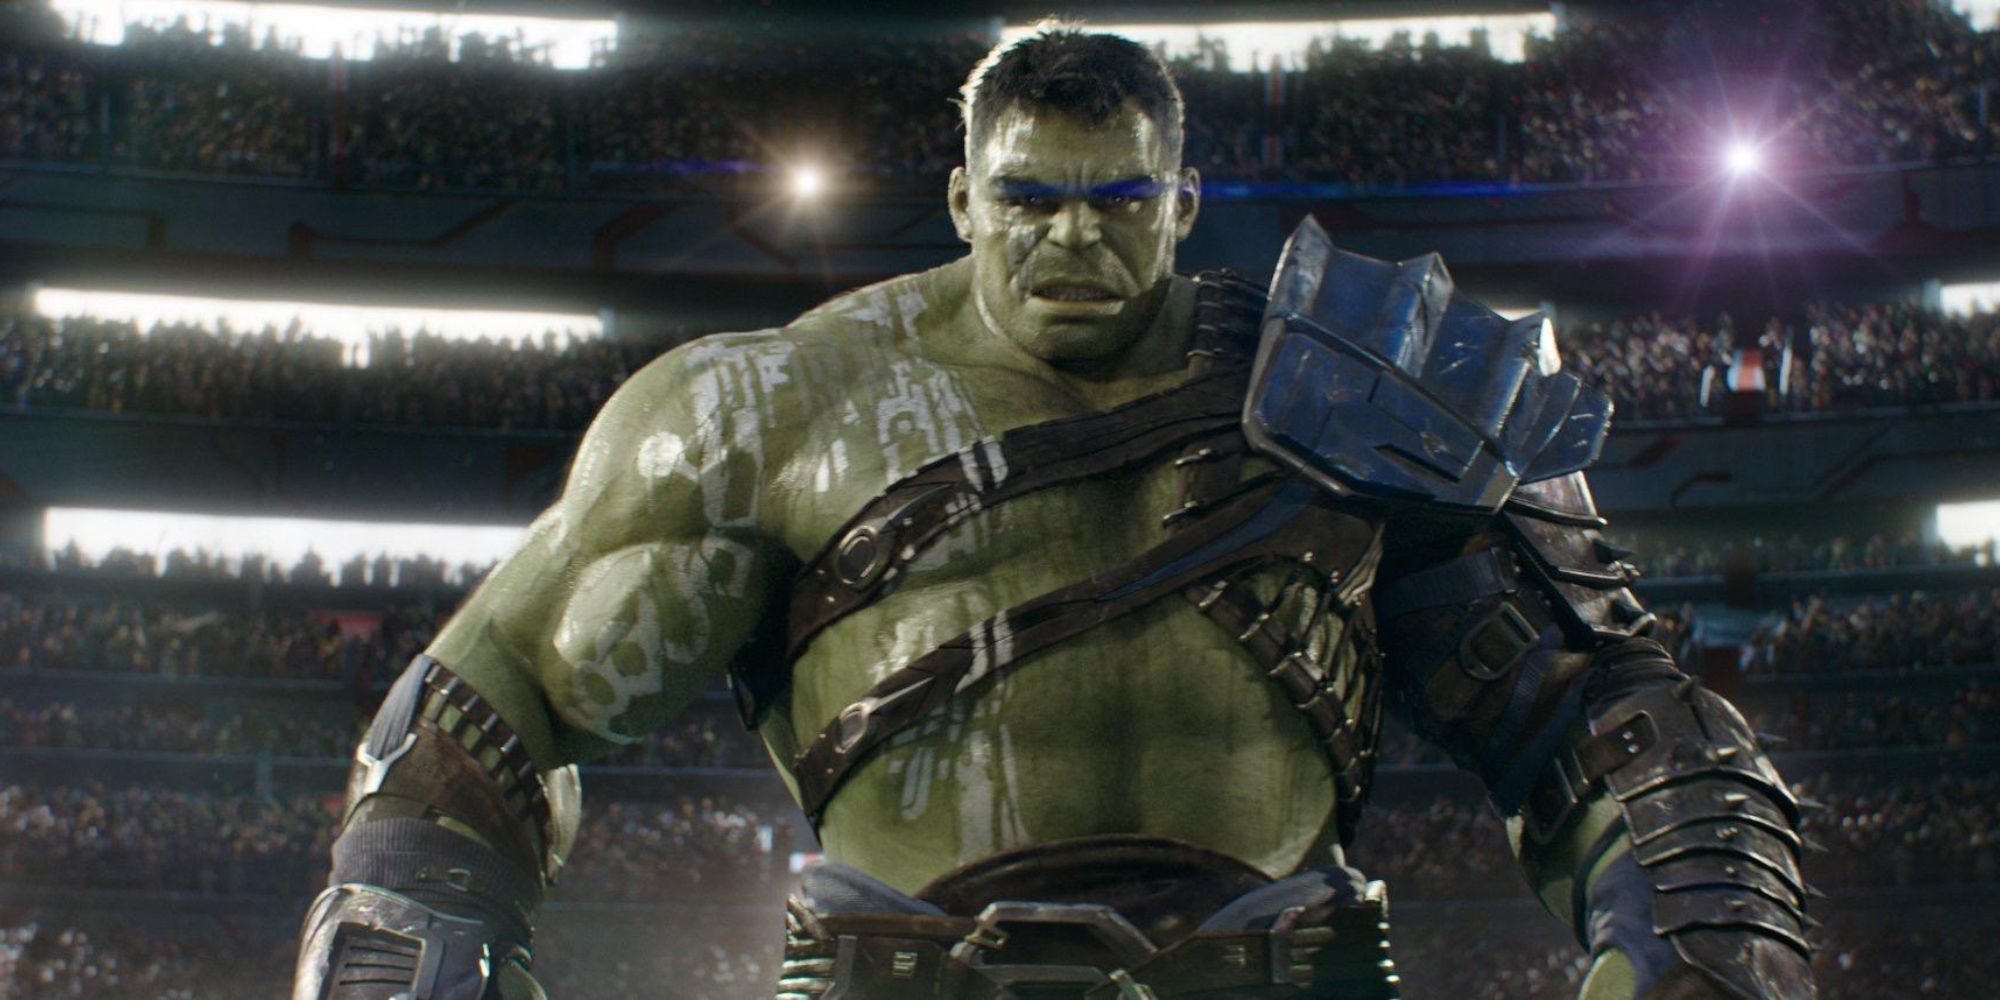 Mark Ruffalo as Gladiator Hulk fighting Thor in the film Thor: Ragnarok